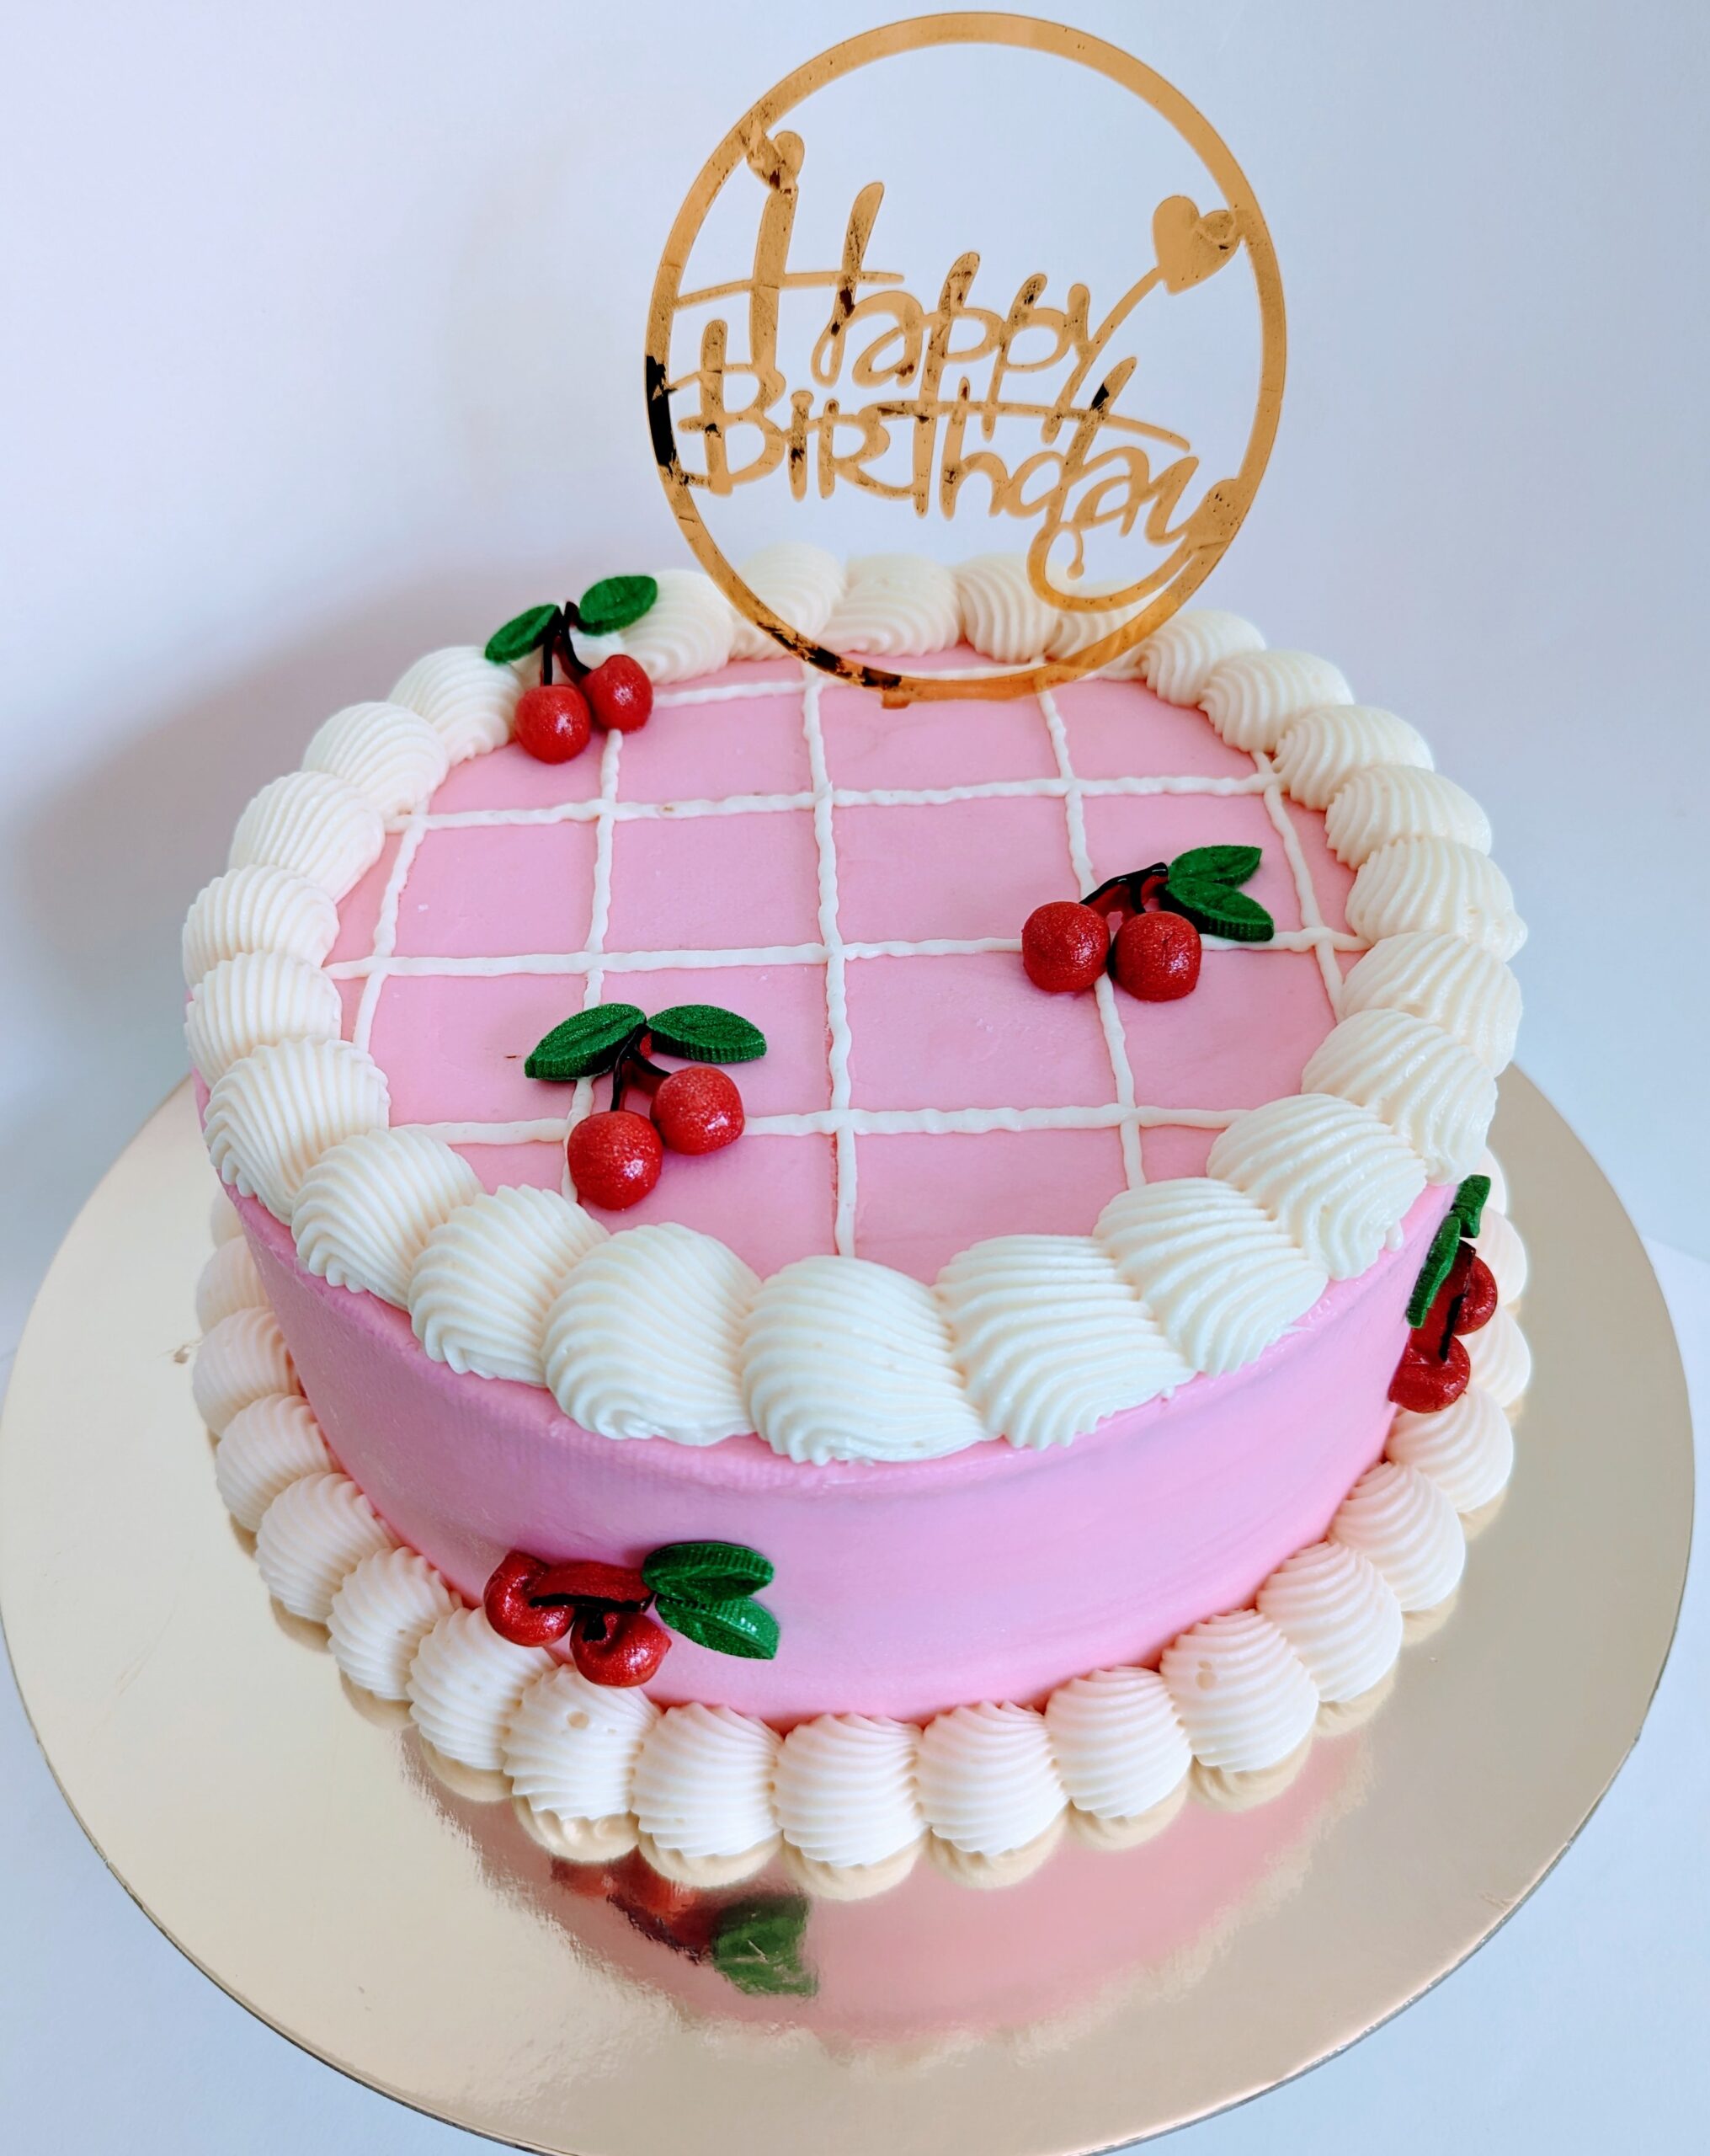 Happy Birthday Cake with Cherries